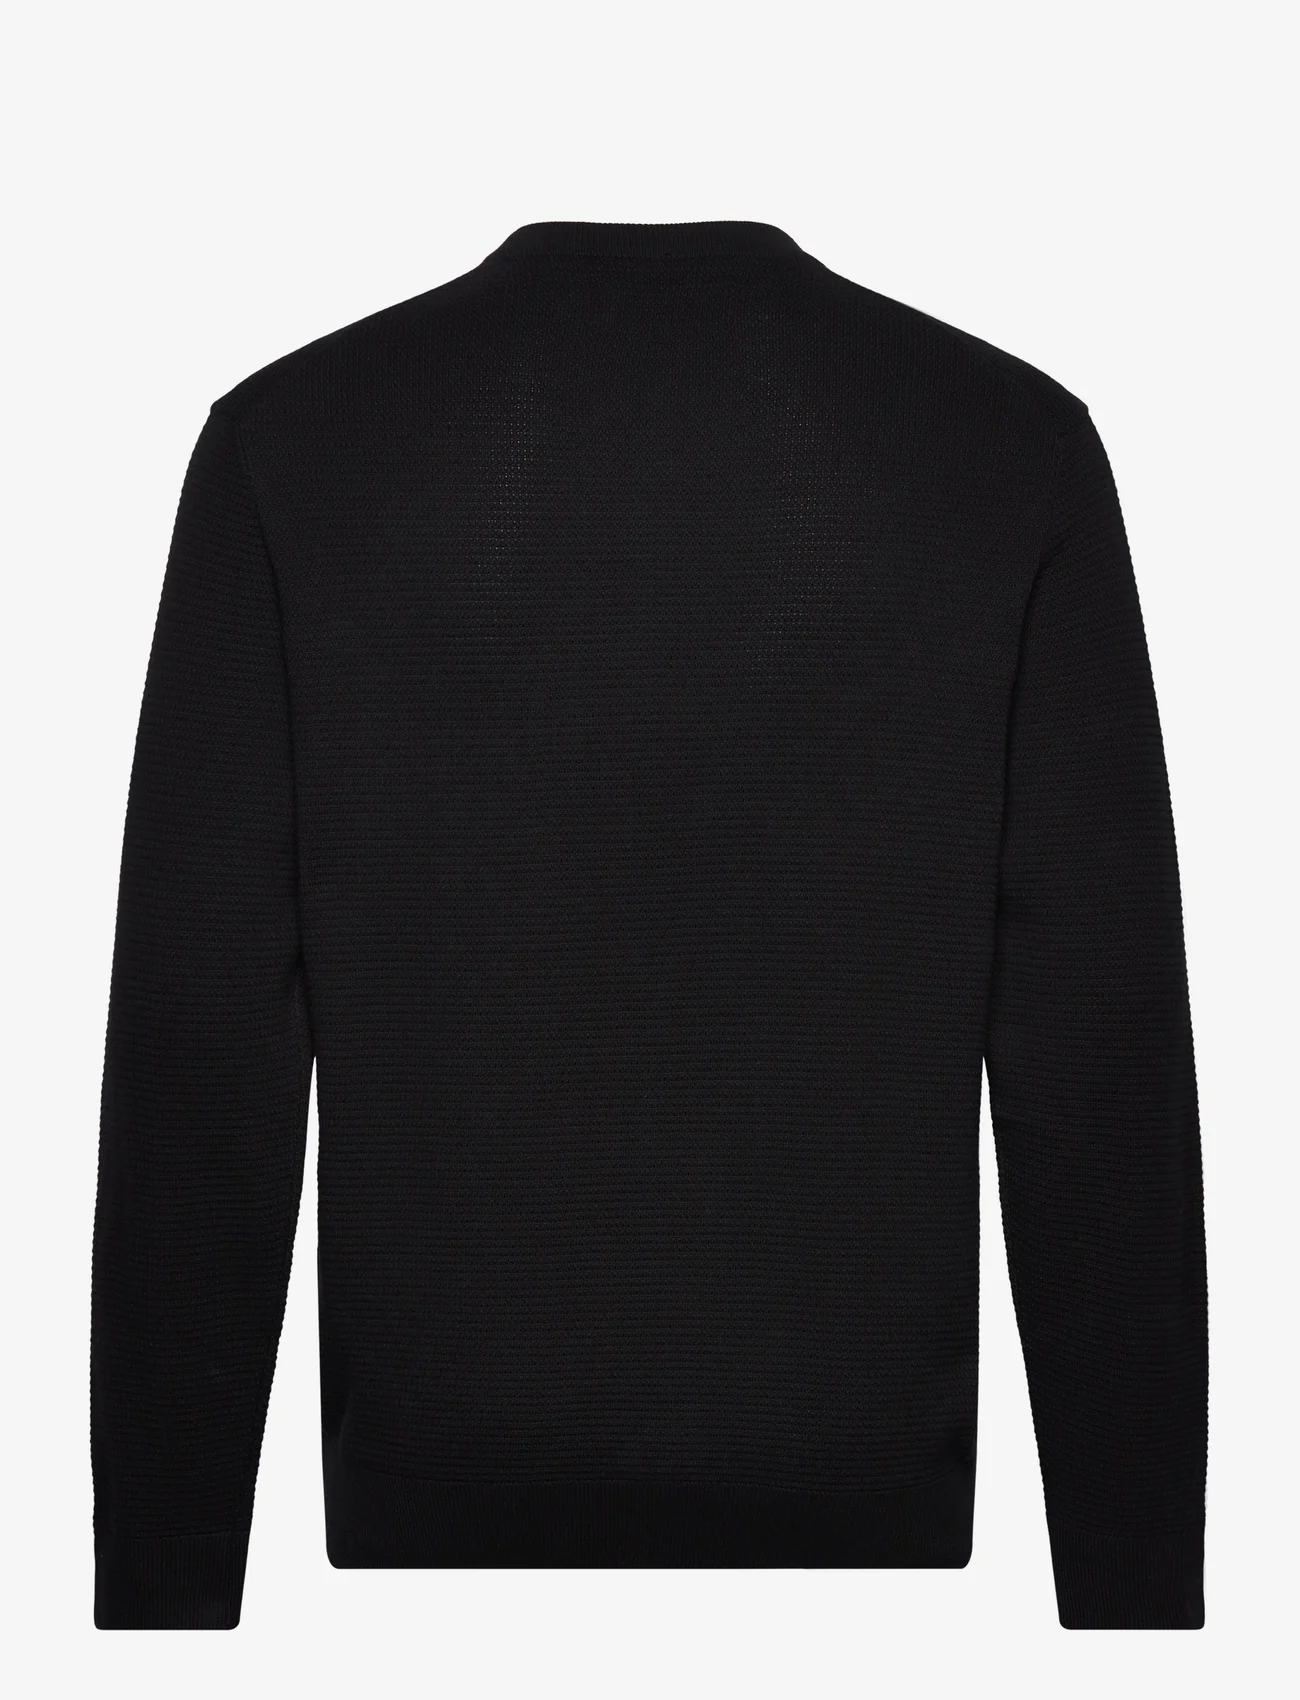 Tom Tailor - structured basic knit - knitted round necks - black - 1